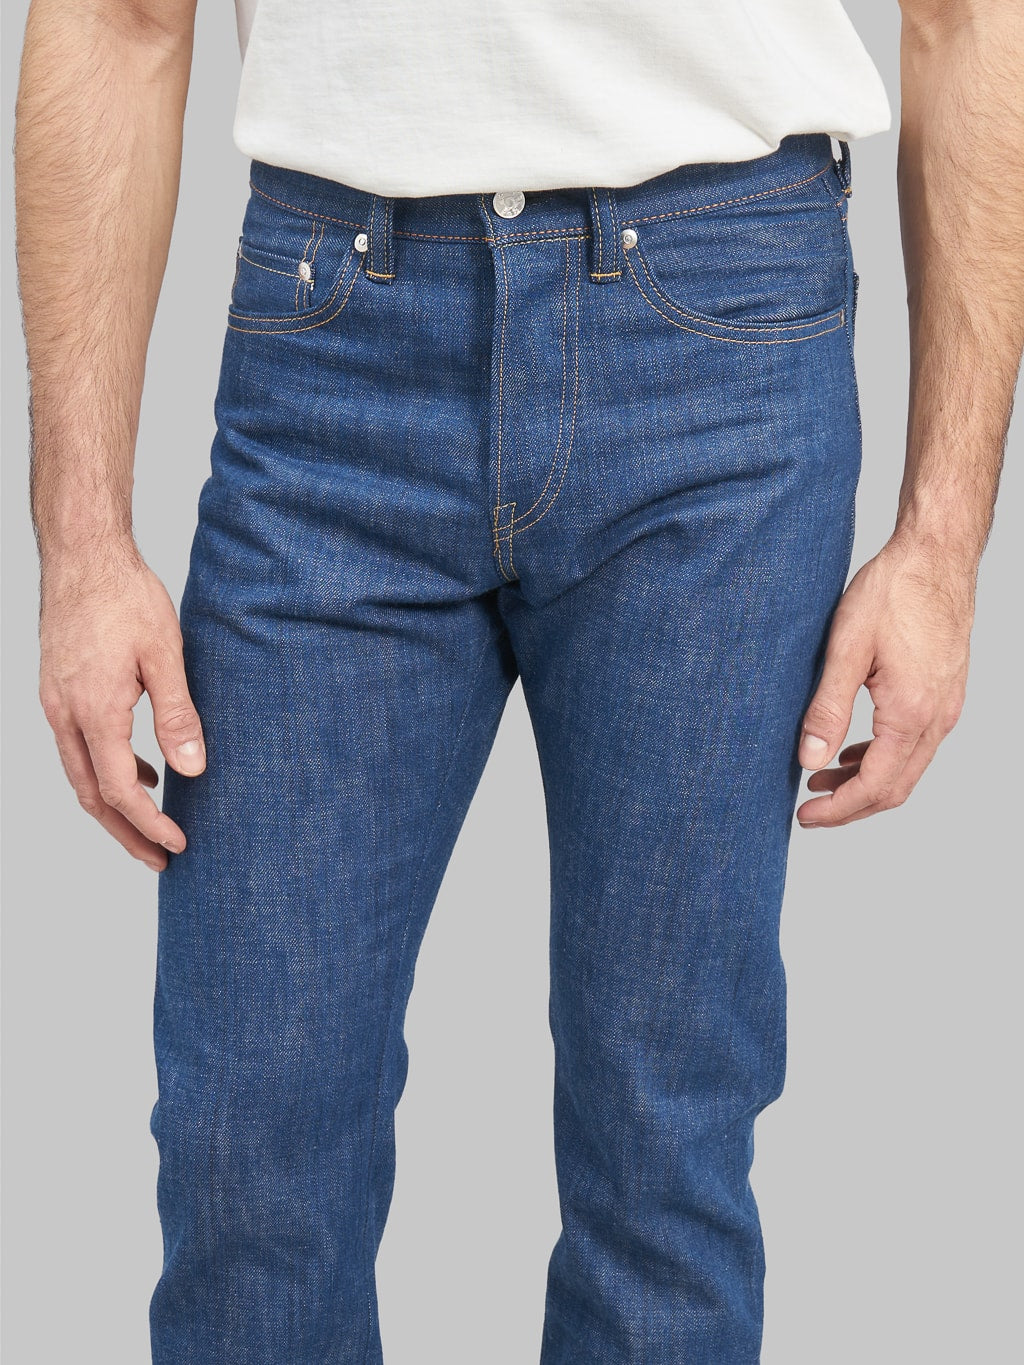 momotaro 0605 ai natural indigo dyed natural tapered denim jeans waist